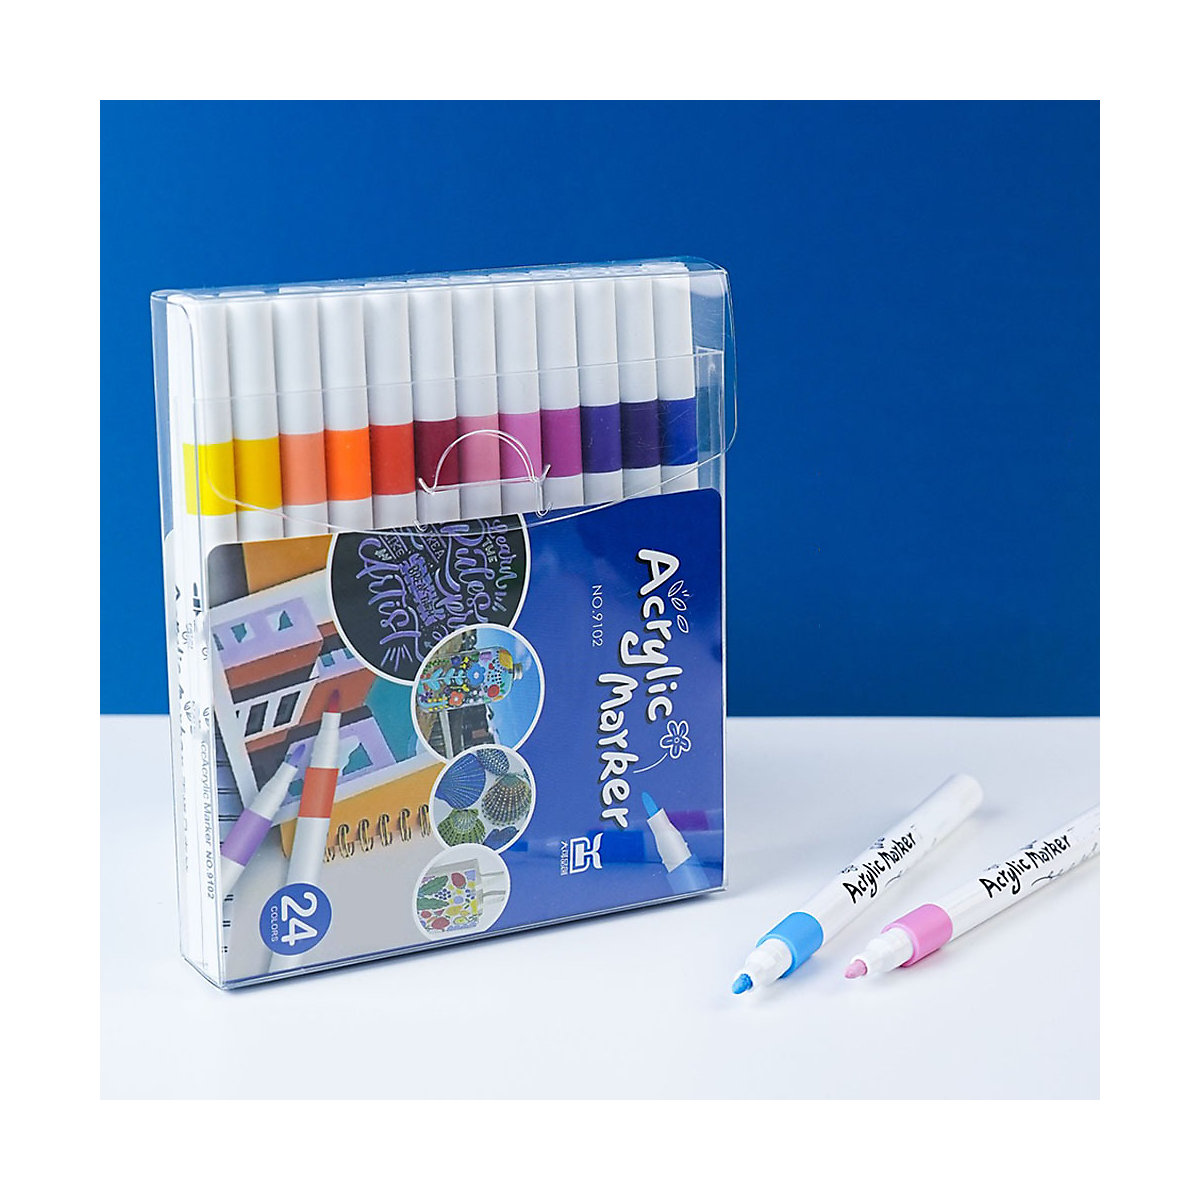 Syntek Acryl-Marker DIY Malerei Farbe auf Wasserbasis Farbe Stift Graffiti-Stifte für Kinder Acrylstifte